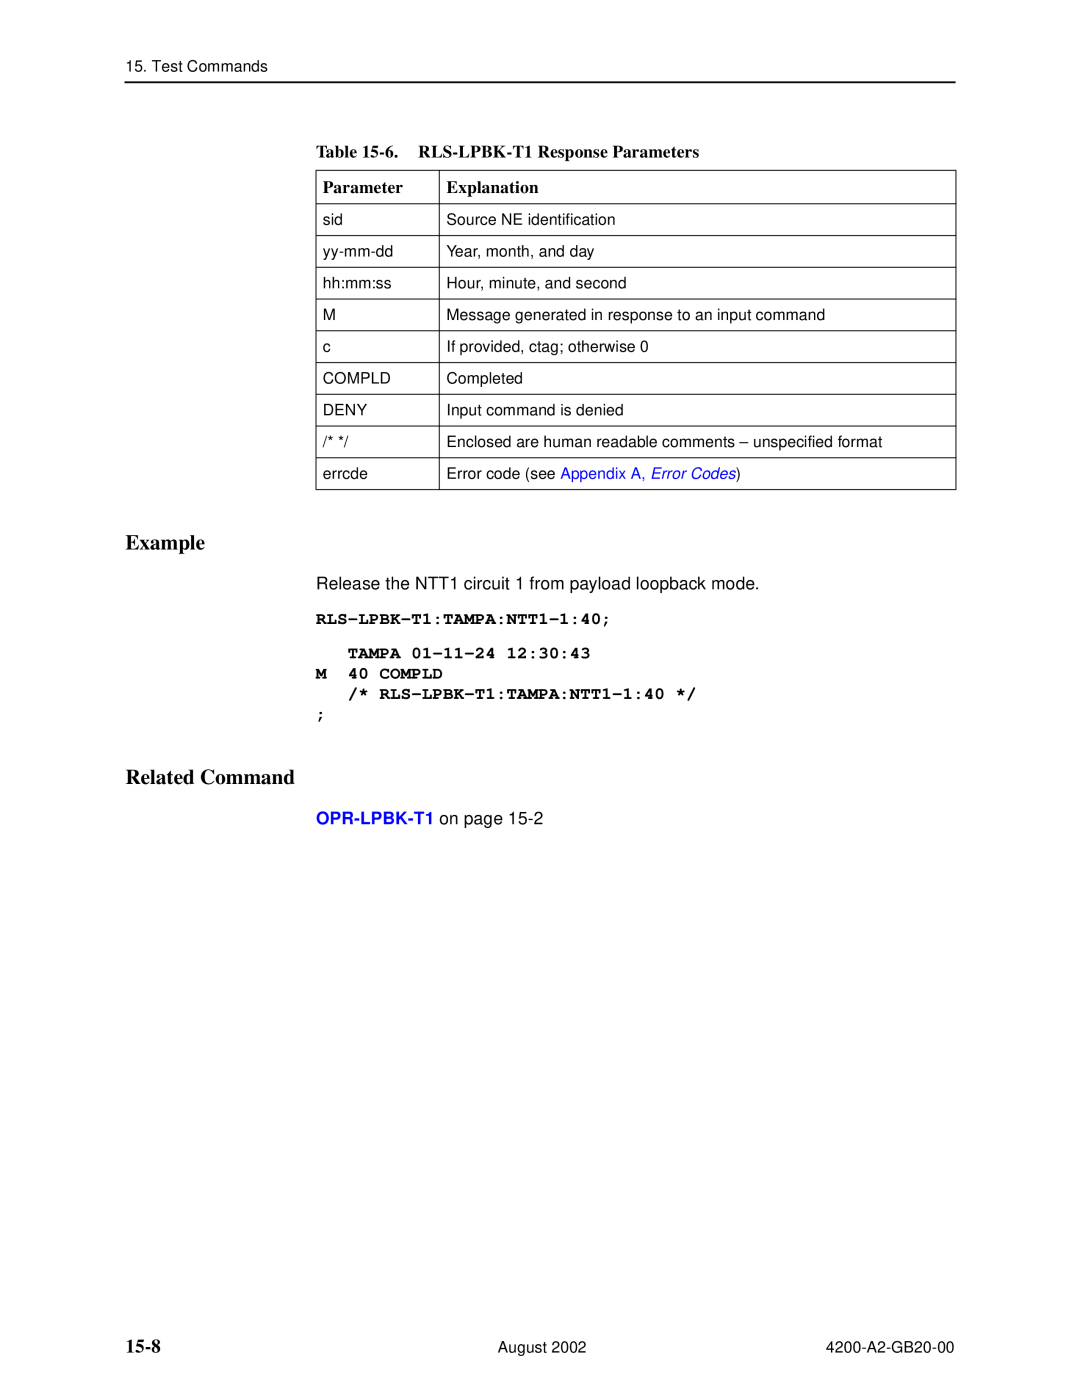 Paradyne 4200 manual 15-8, 6. RLS-LPBK-T1 Response Parameters, RLS-LPBK-T1TAMPANTT1-140 TAMPA 01-11-24 M 40 COMPLD, Example 